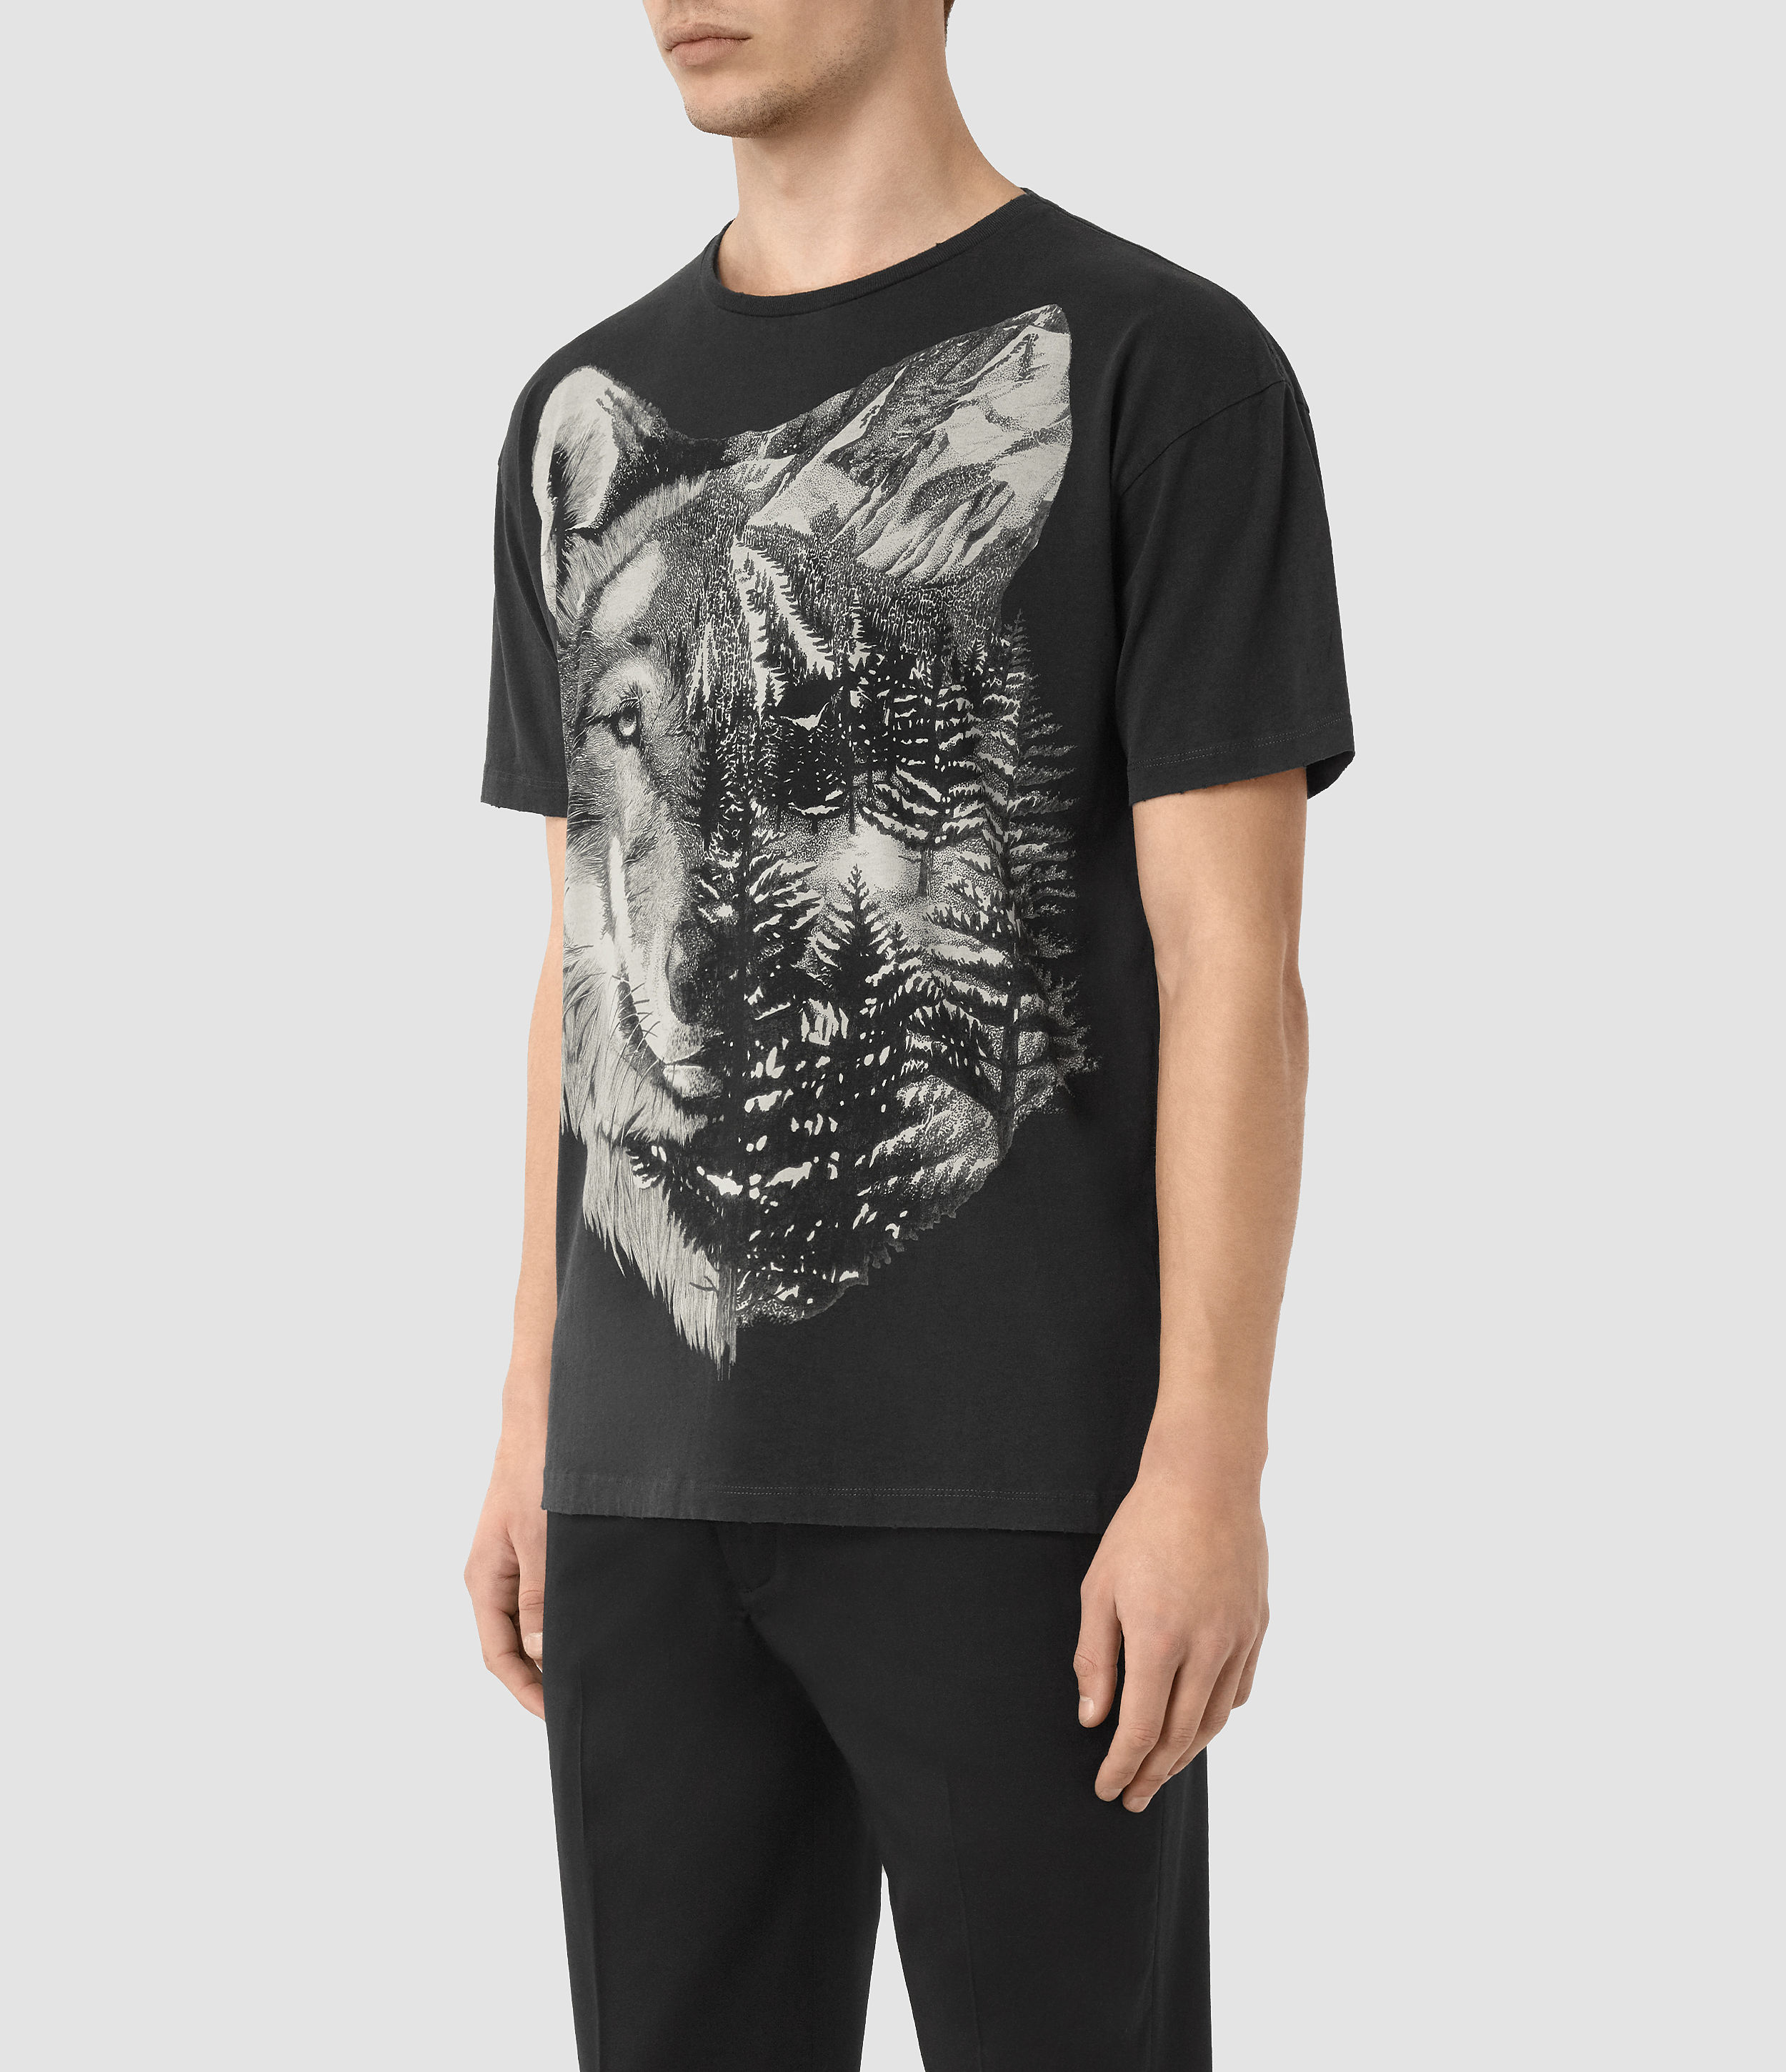 SUSI CREW T-SHIRT Design – Fancy T-shirts